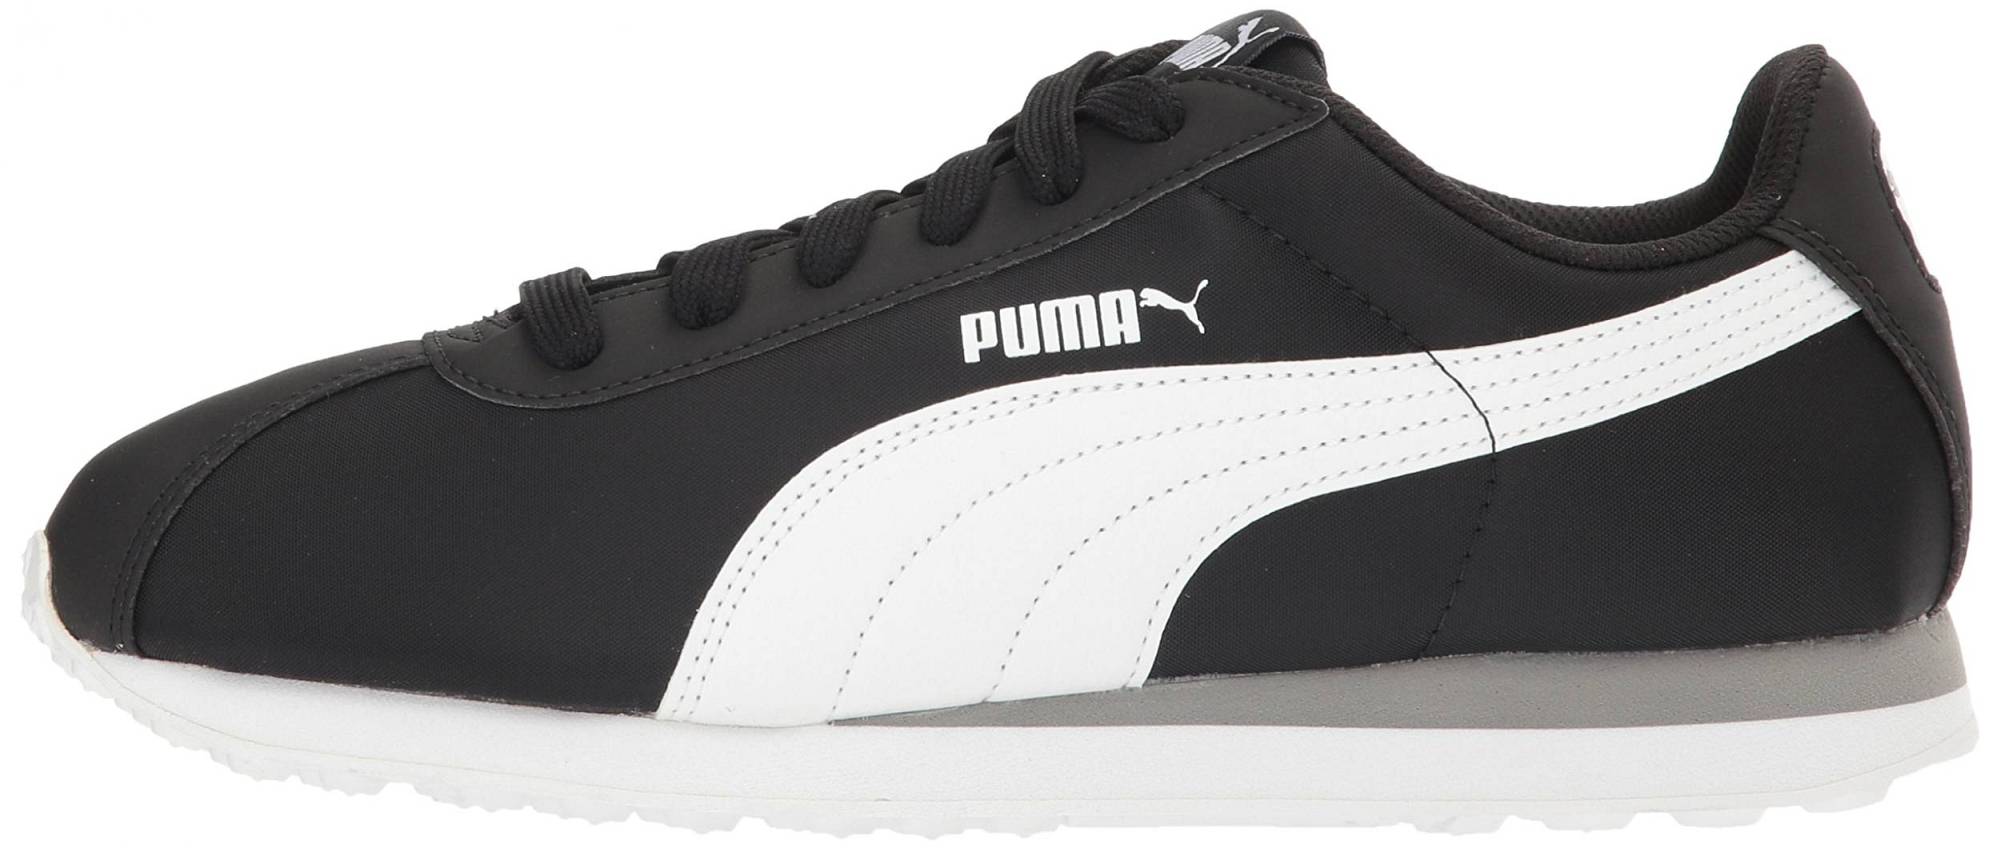 Puma Turin Nylon – Shoes Reviews & Reasons To Buy